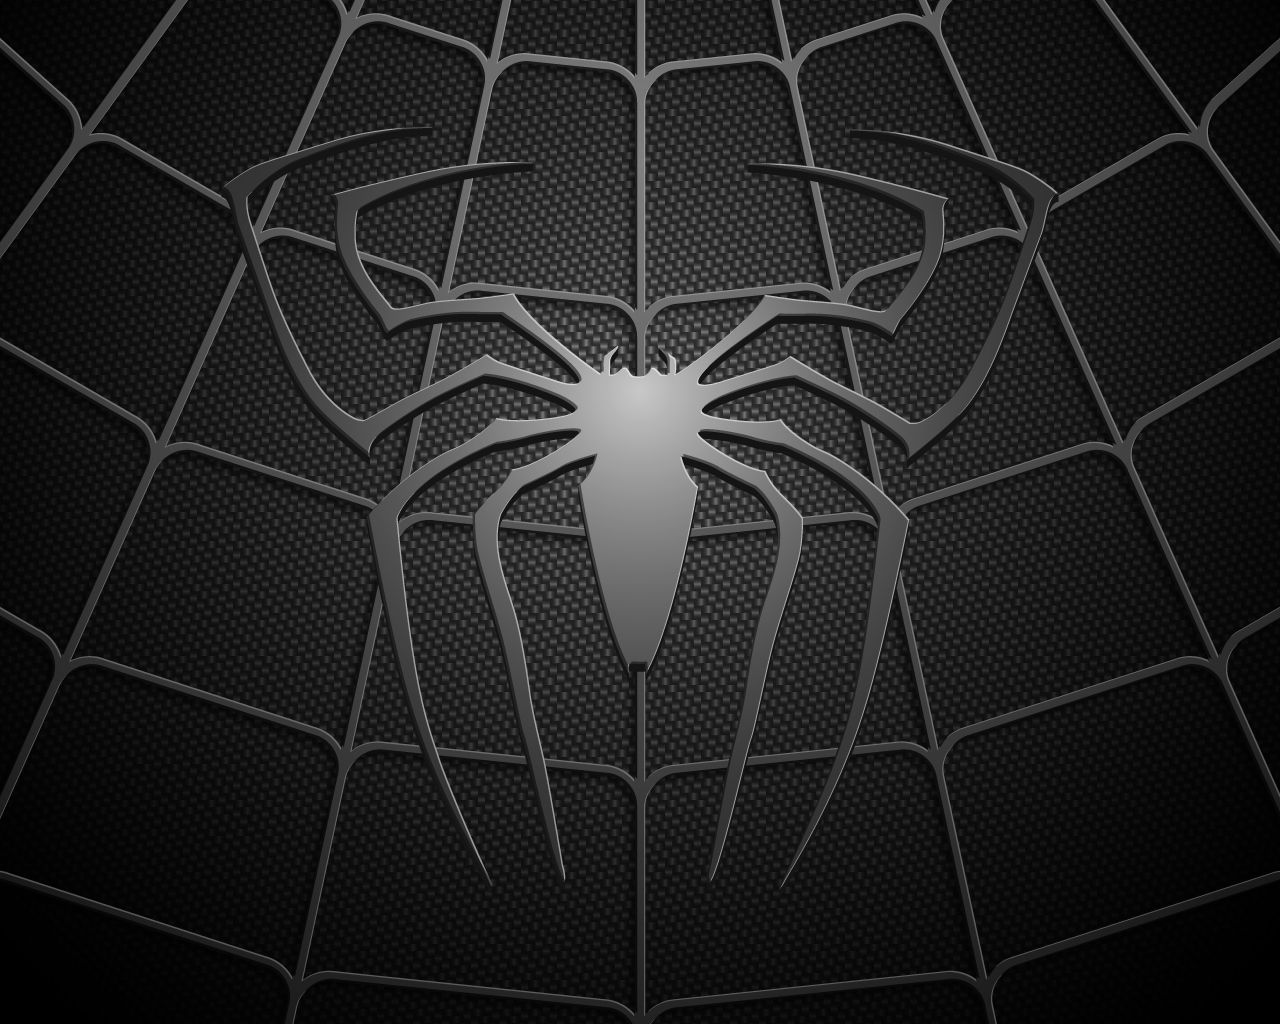 imagenes hd壁紙,クモの巣,パターン,対称,設計,モノクローム